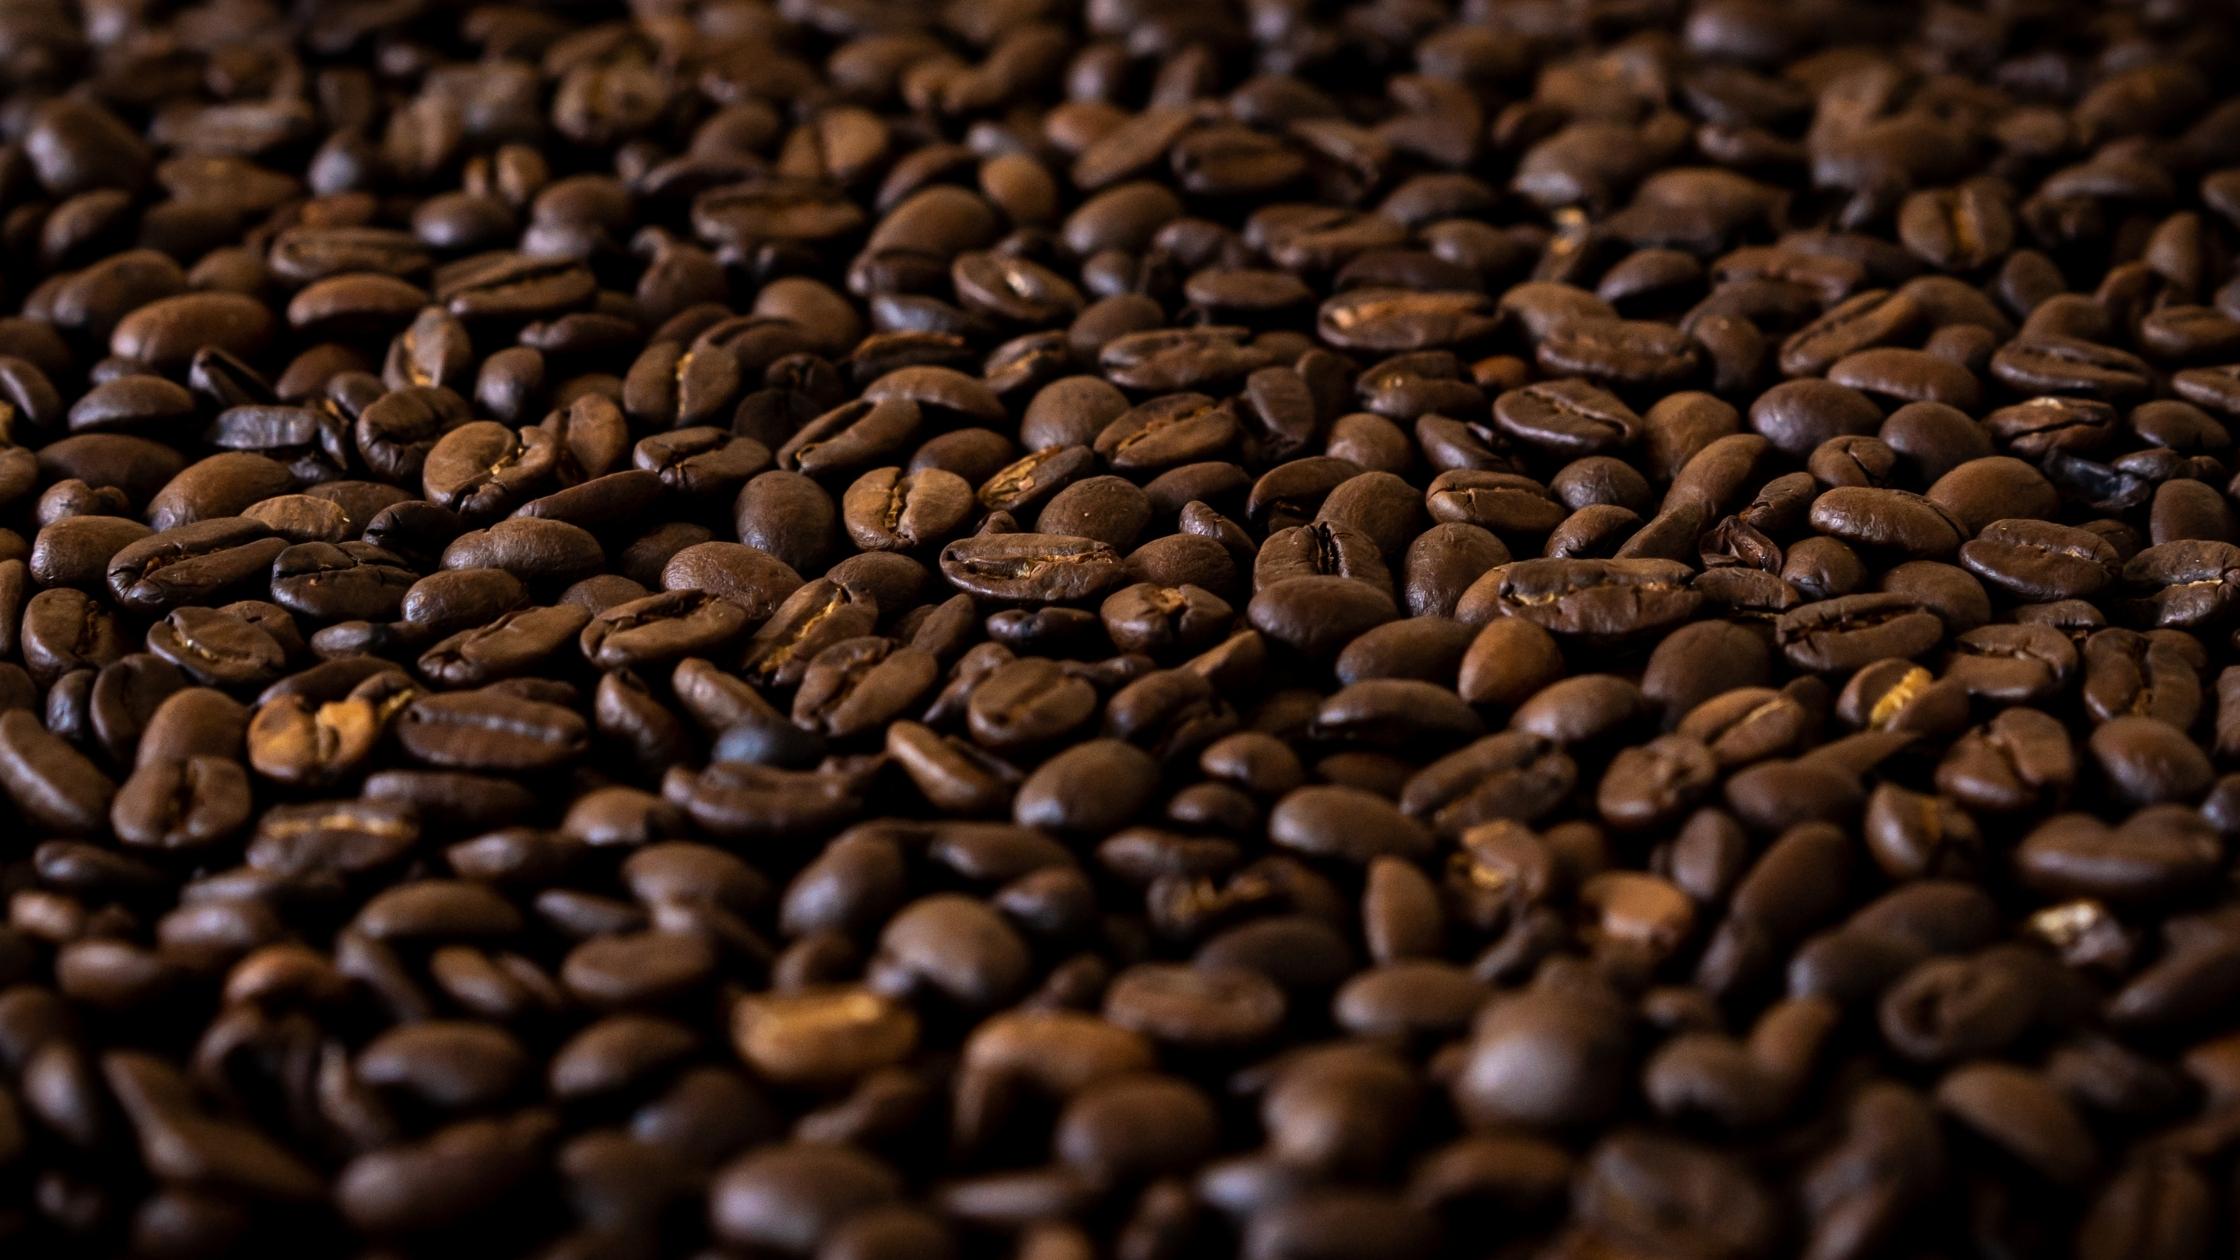 Medium-dark roast coffee beans